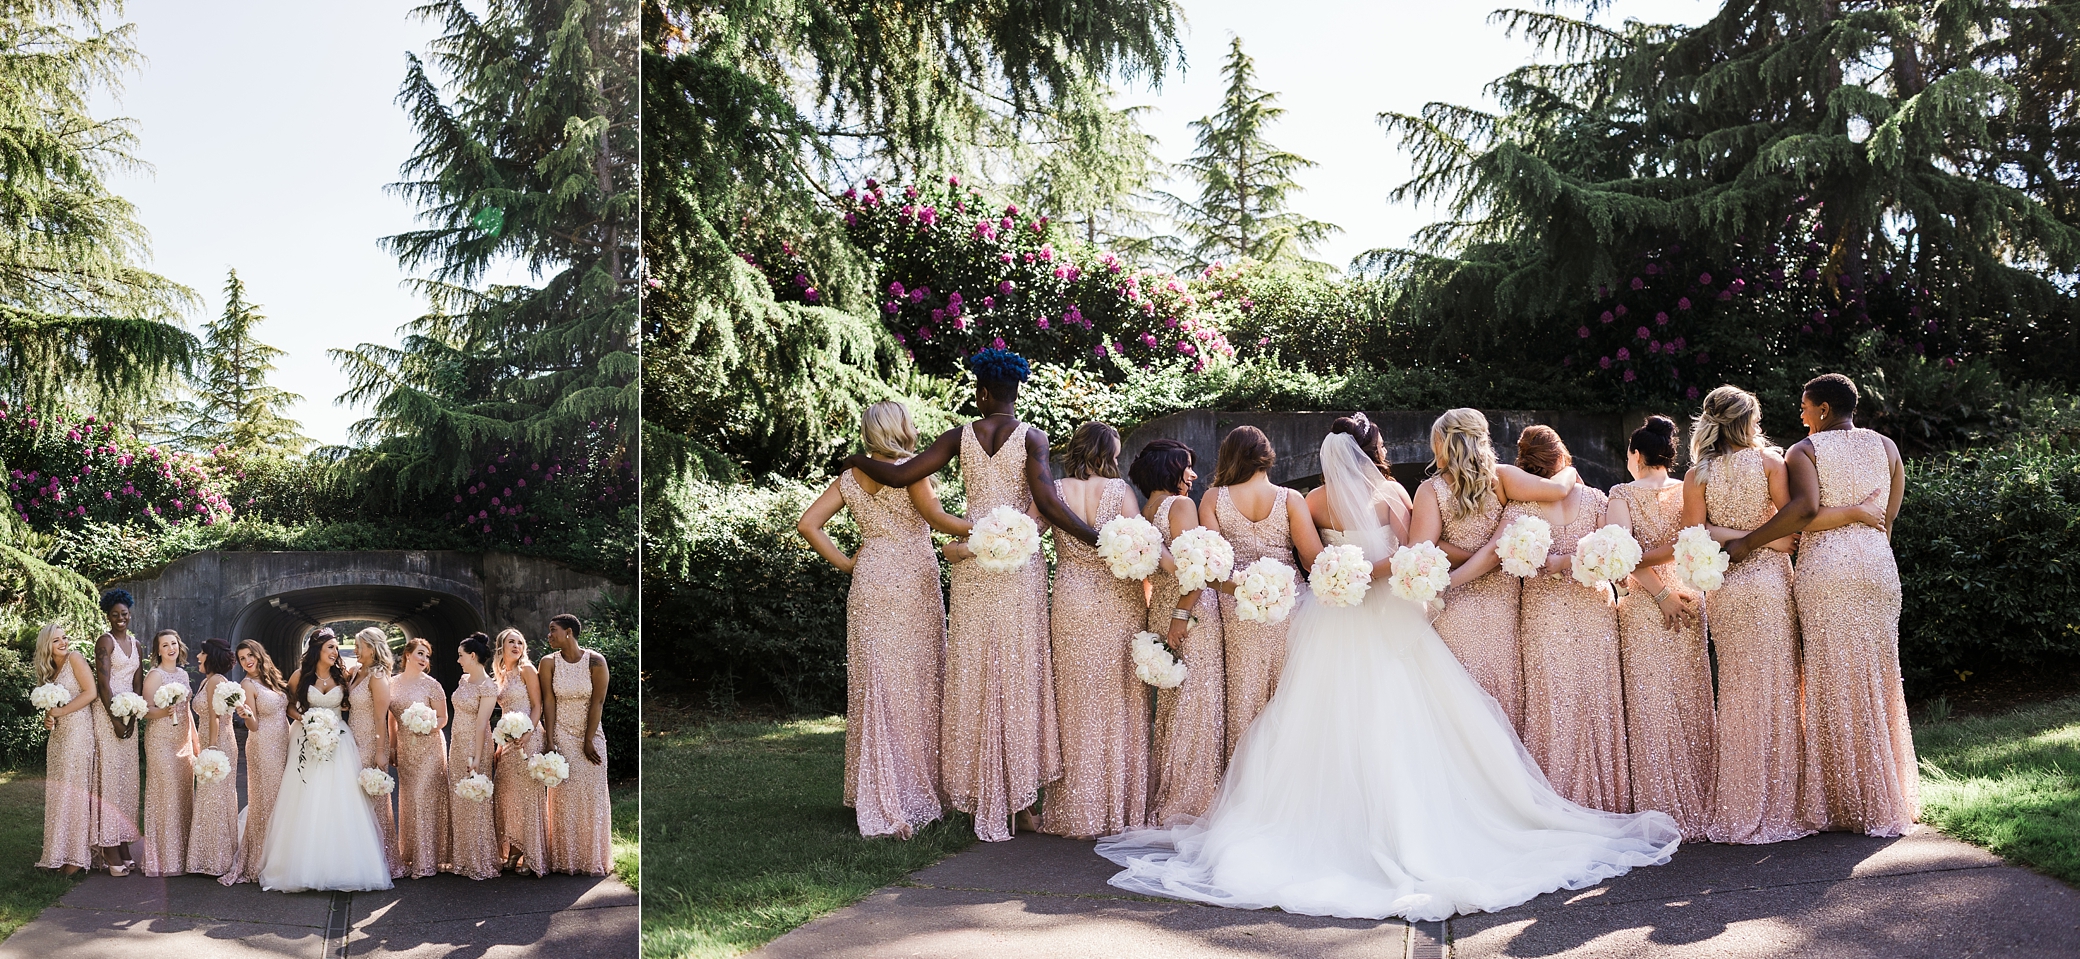 Bride and bridesmaids formal photos | Megan Montalvo Photography